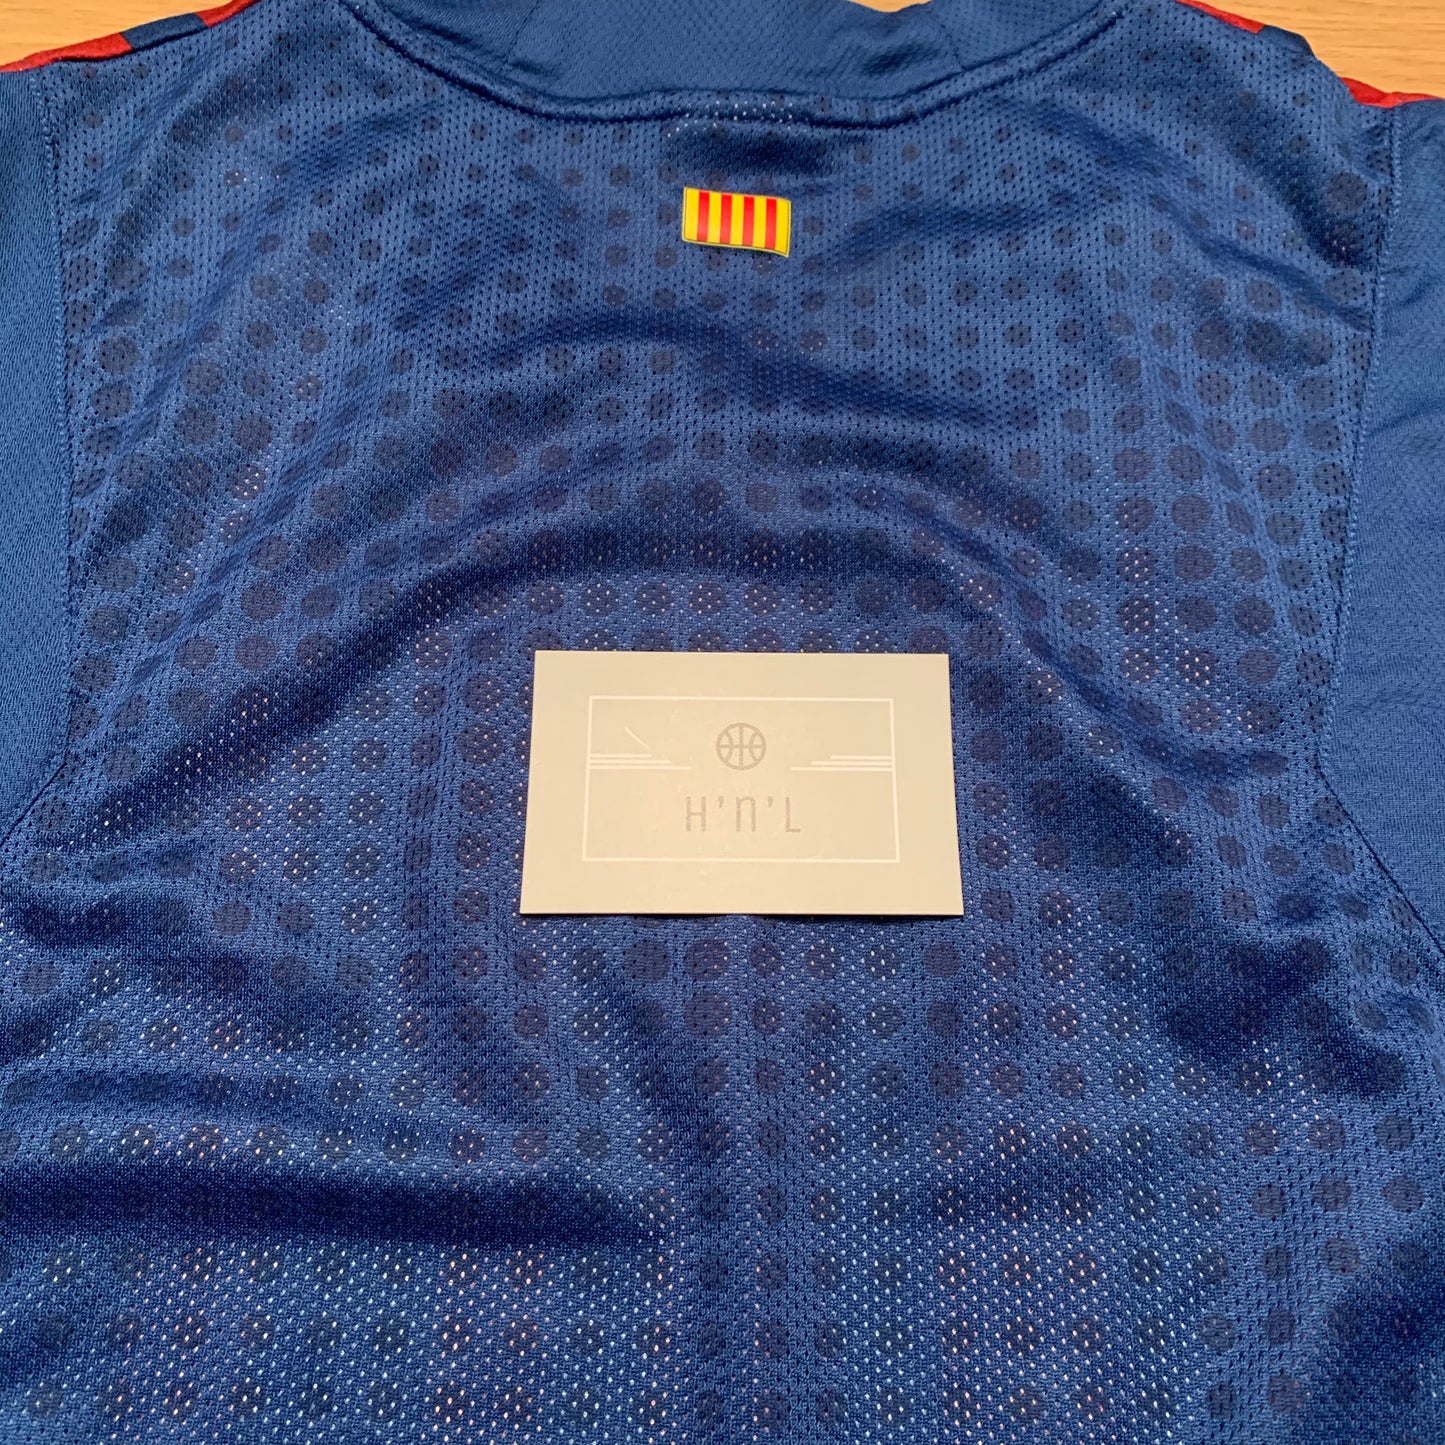 FC Barcelona Nike Jersey